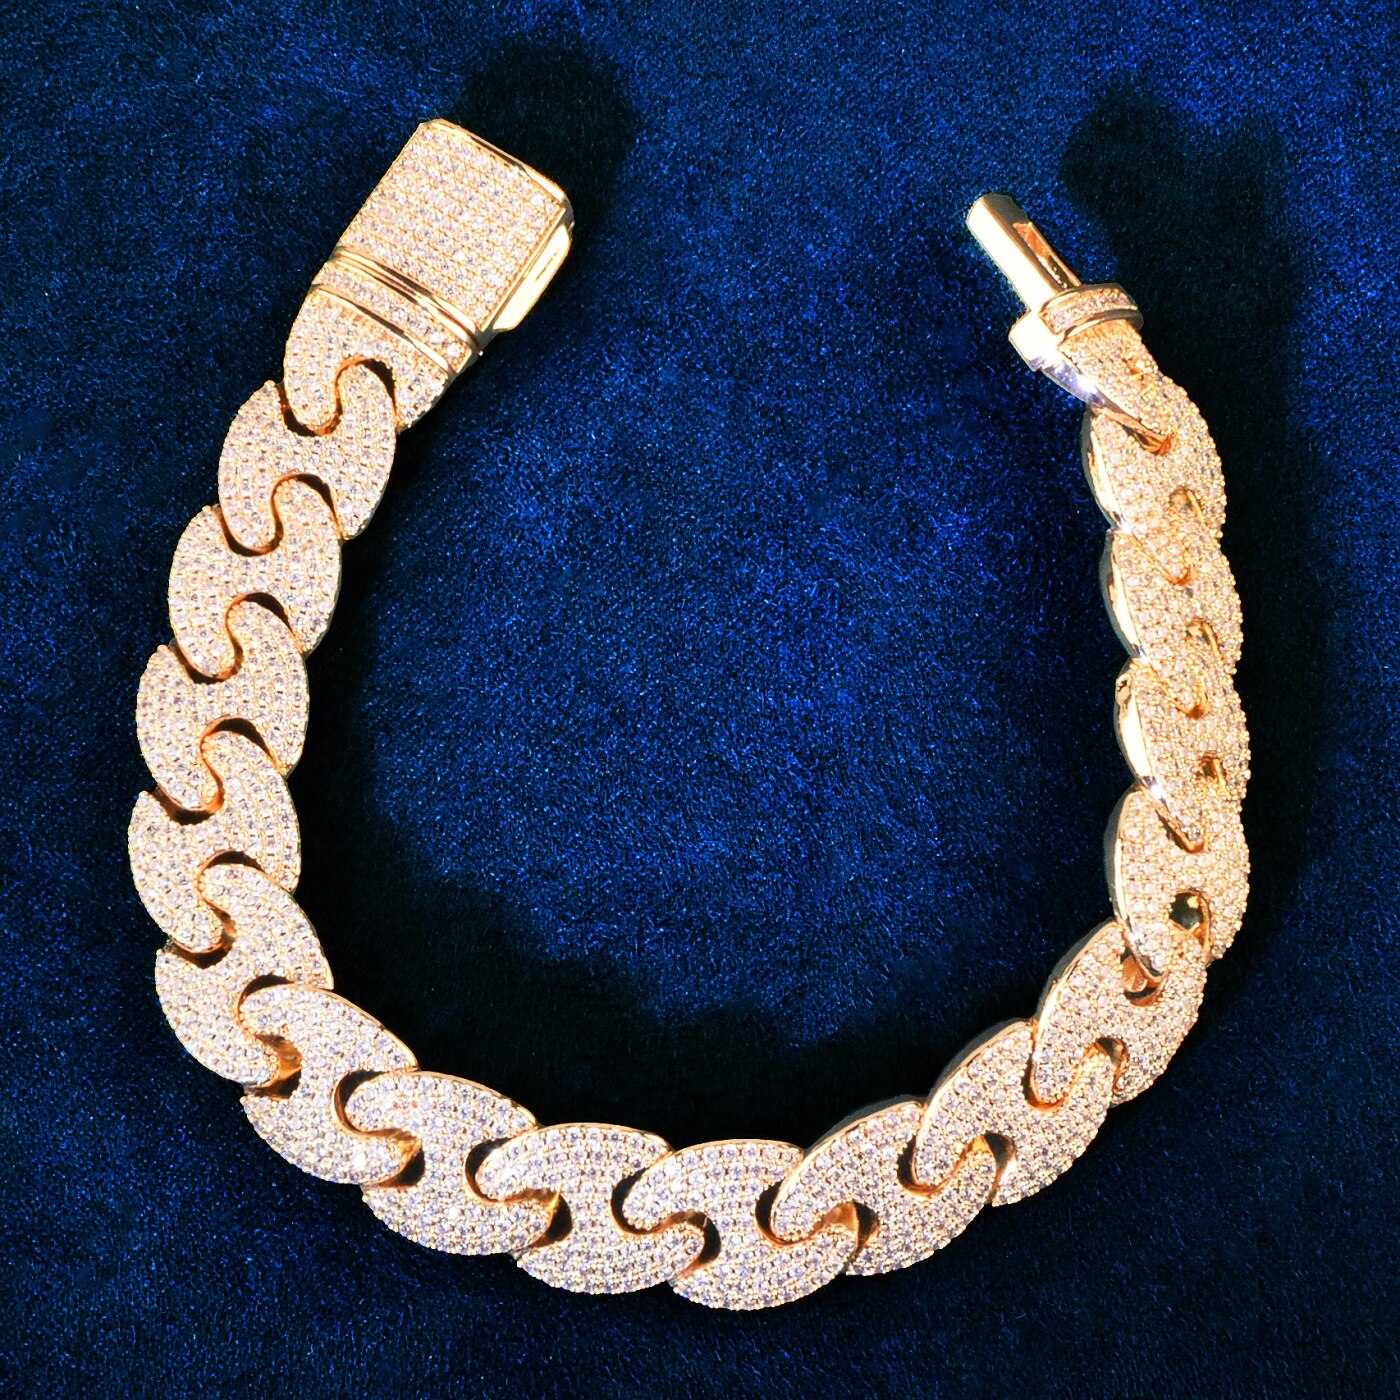 12mm | Cuban Link Bracelet | Gold Cuban Link Bracelet | Silver Cuban Link Bracelet